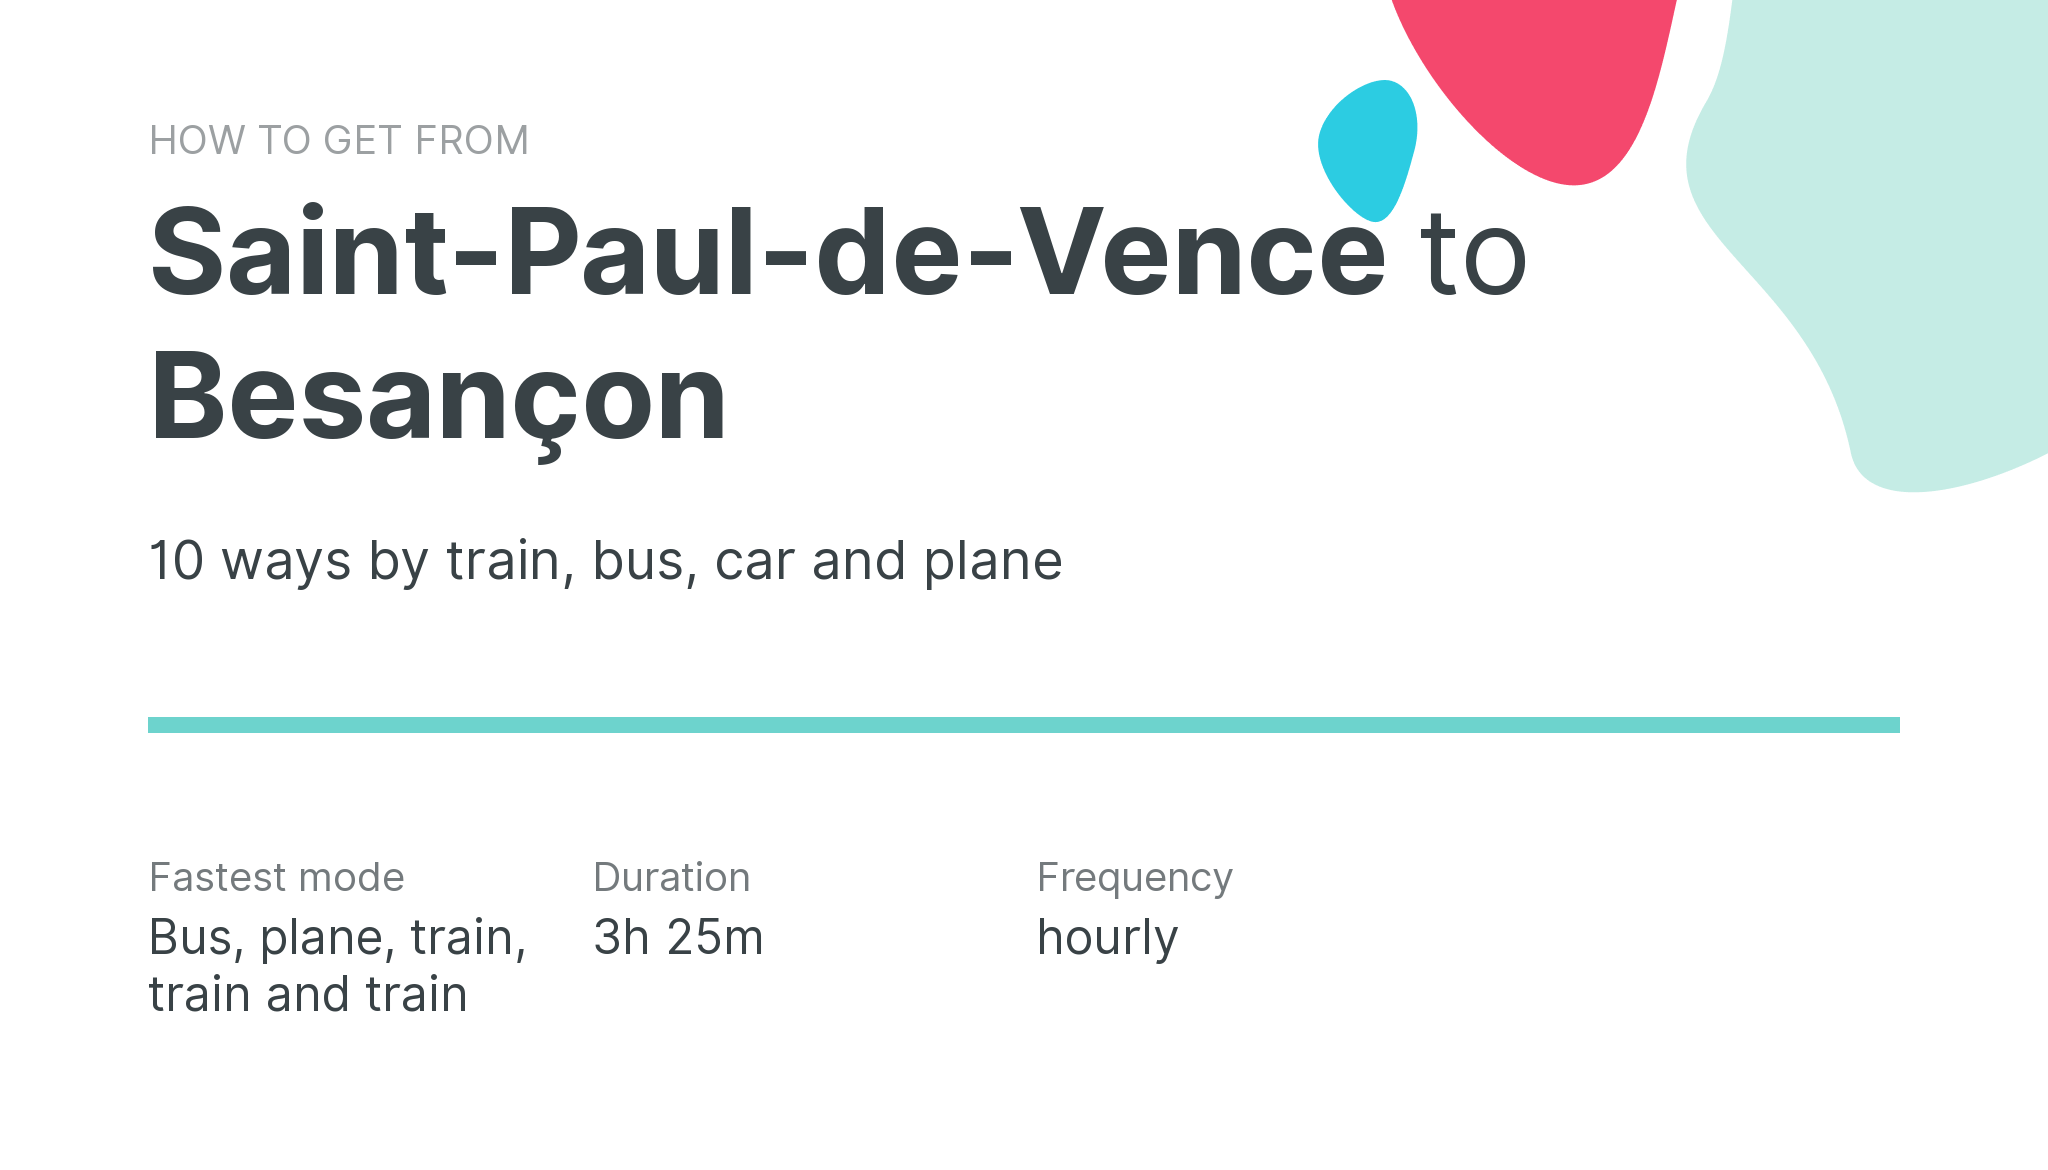 How do I get from Saint-Paul-de-Vence to Besançon